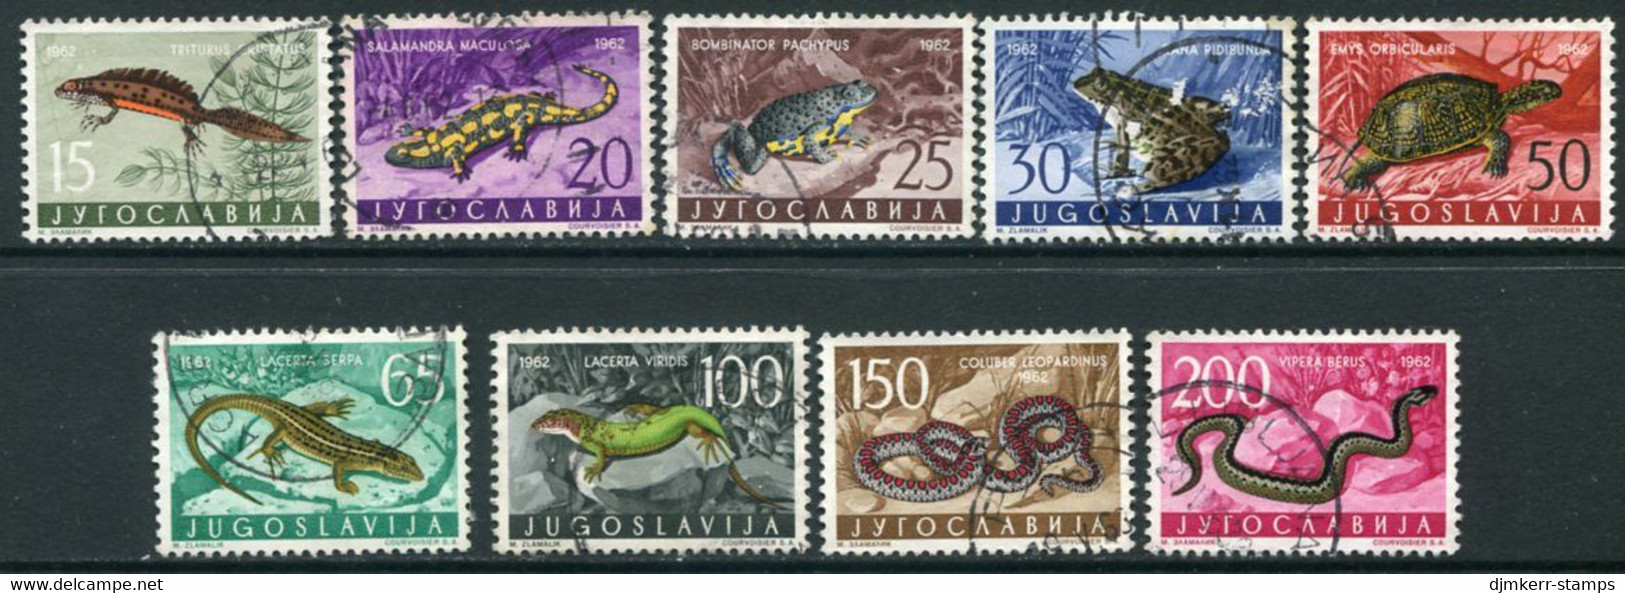 YUGOSLAVIA 1962 Amphibians And Reptiles  Used.  Michel 1007-15 - Gebruikt